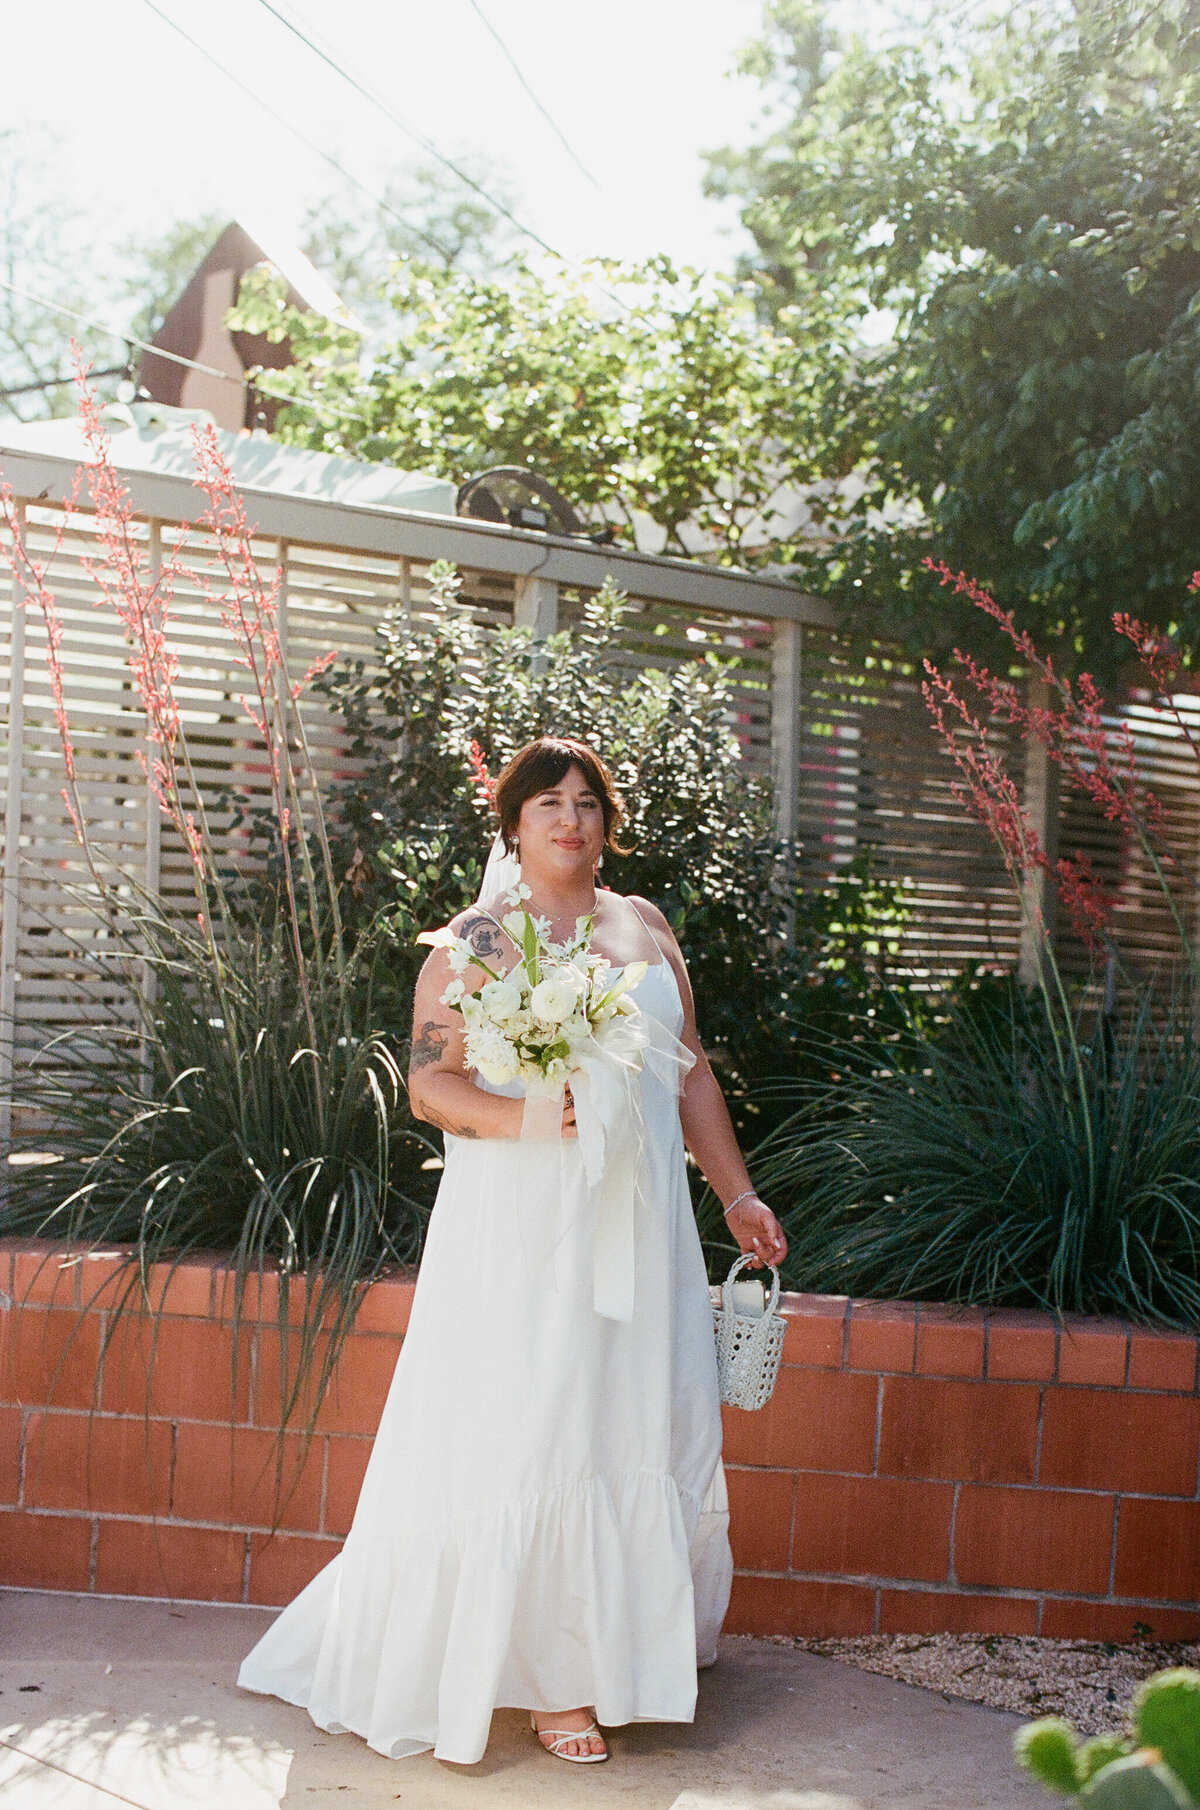 Bride holding white bouquet of florals